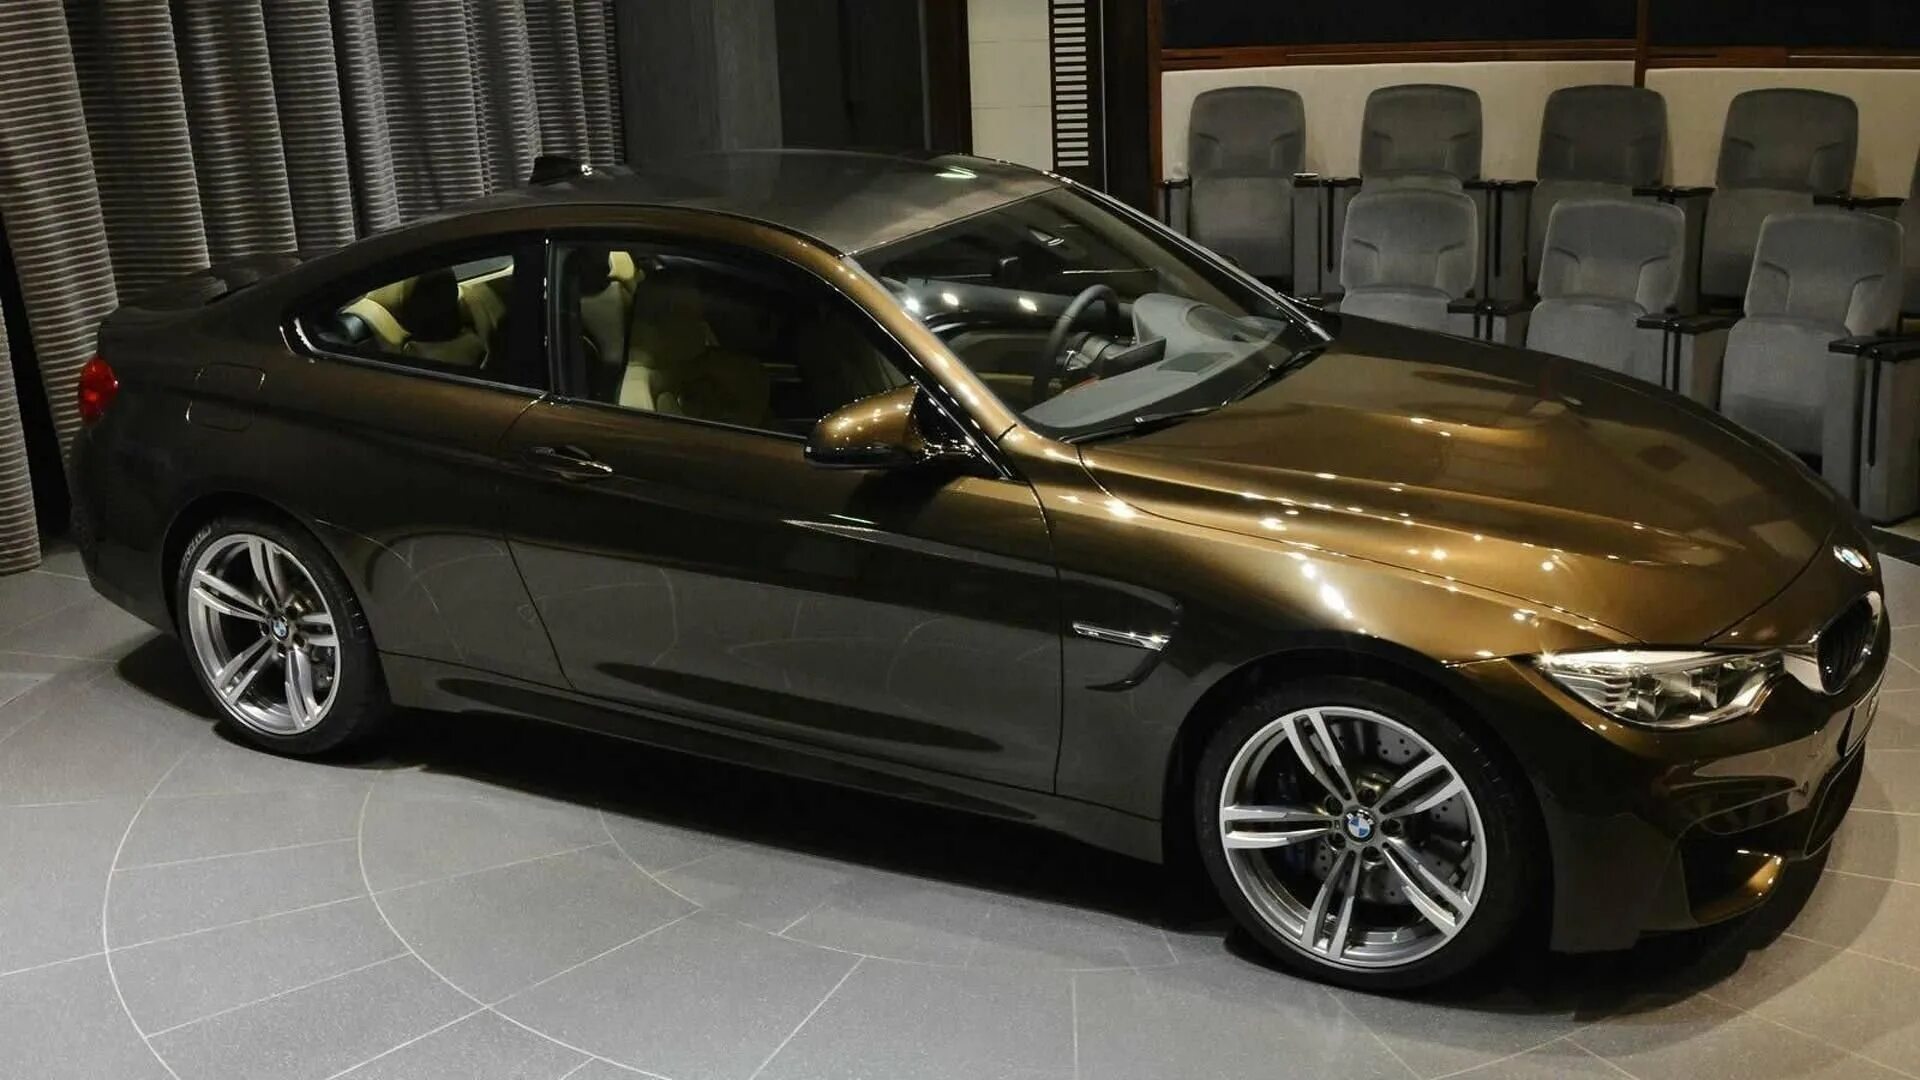 Brown car. BMW m4 Brown Topaz Metallic. BMW Pyrite Brown краска. BMW f10 коричневая. BMW f30 sparkling Bronze.